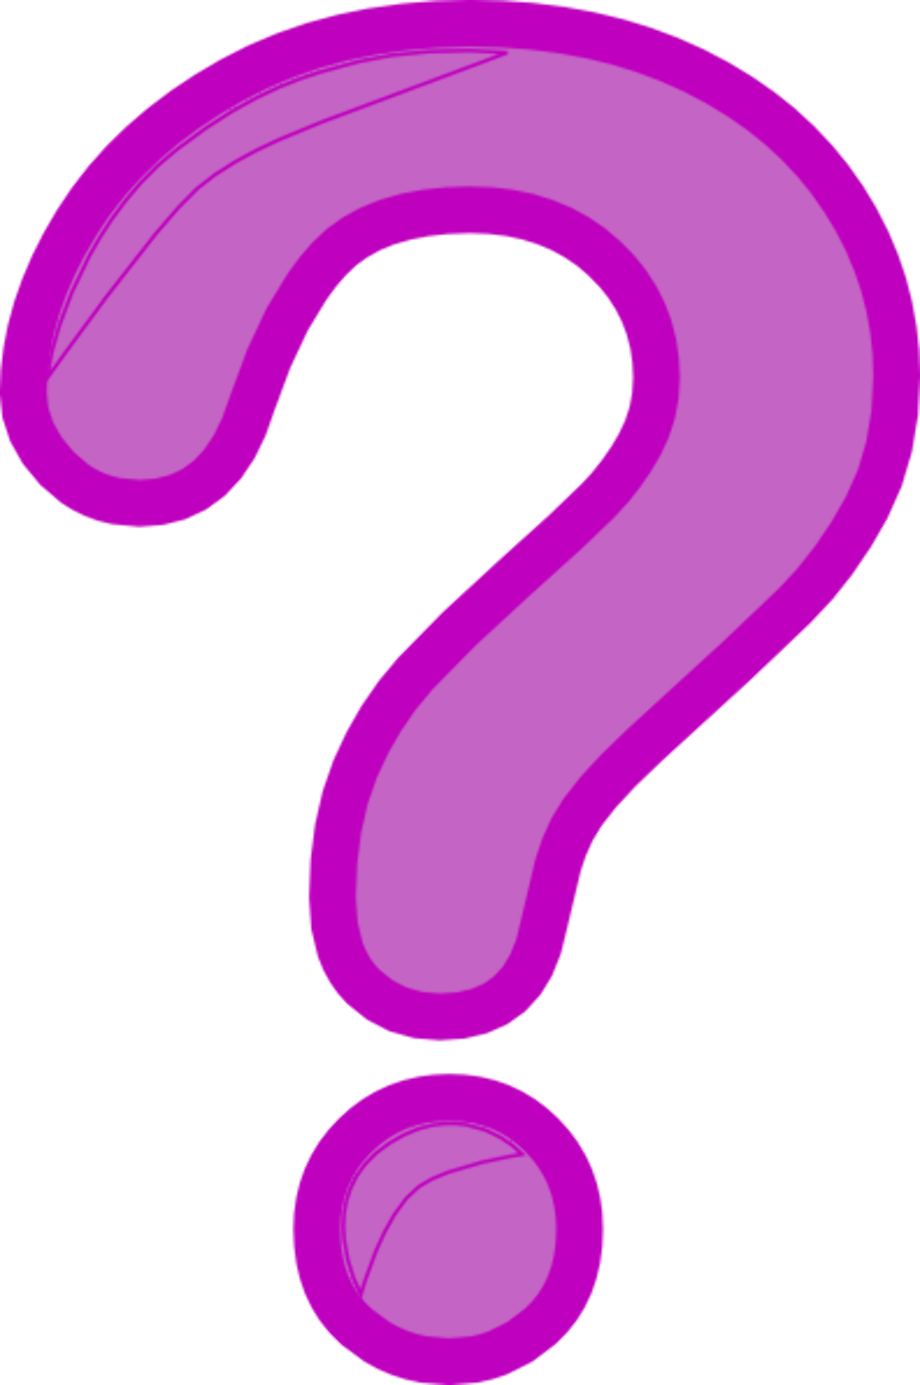 question mark clip art purple